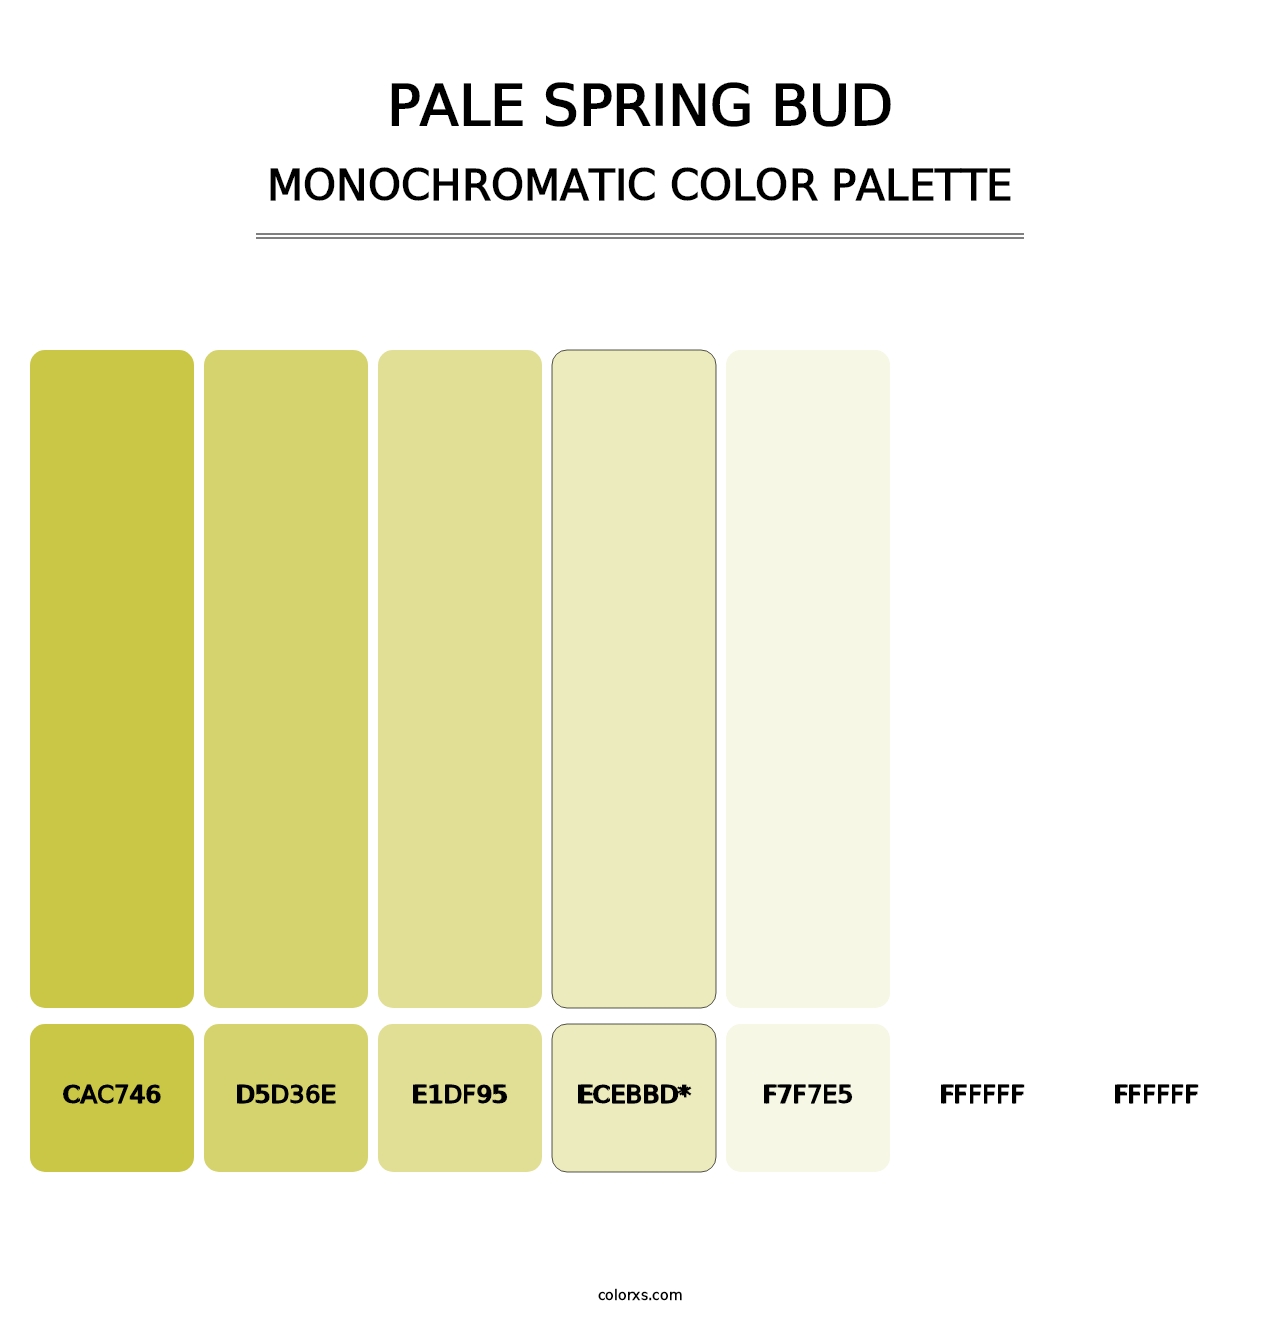 Pale Spring Bud - Monochromatic Color Palette